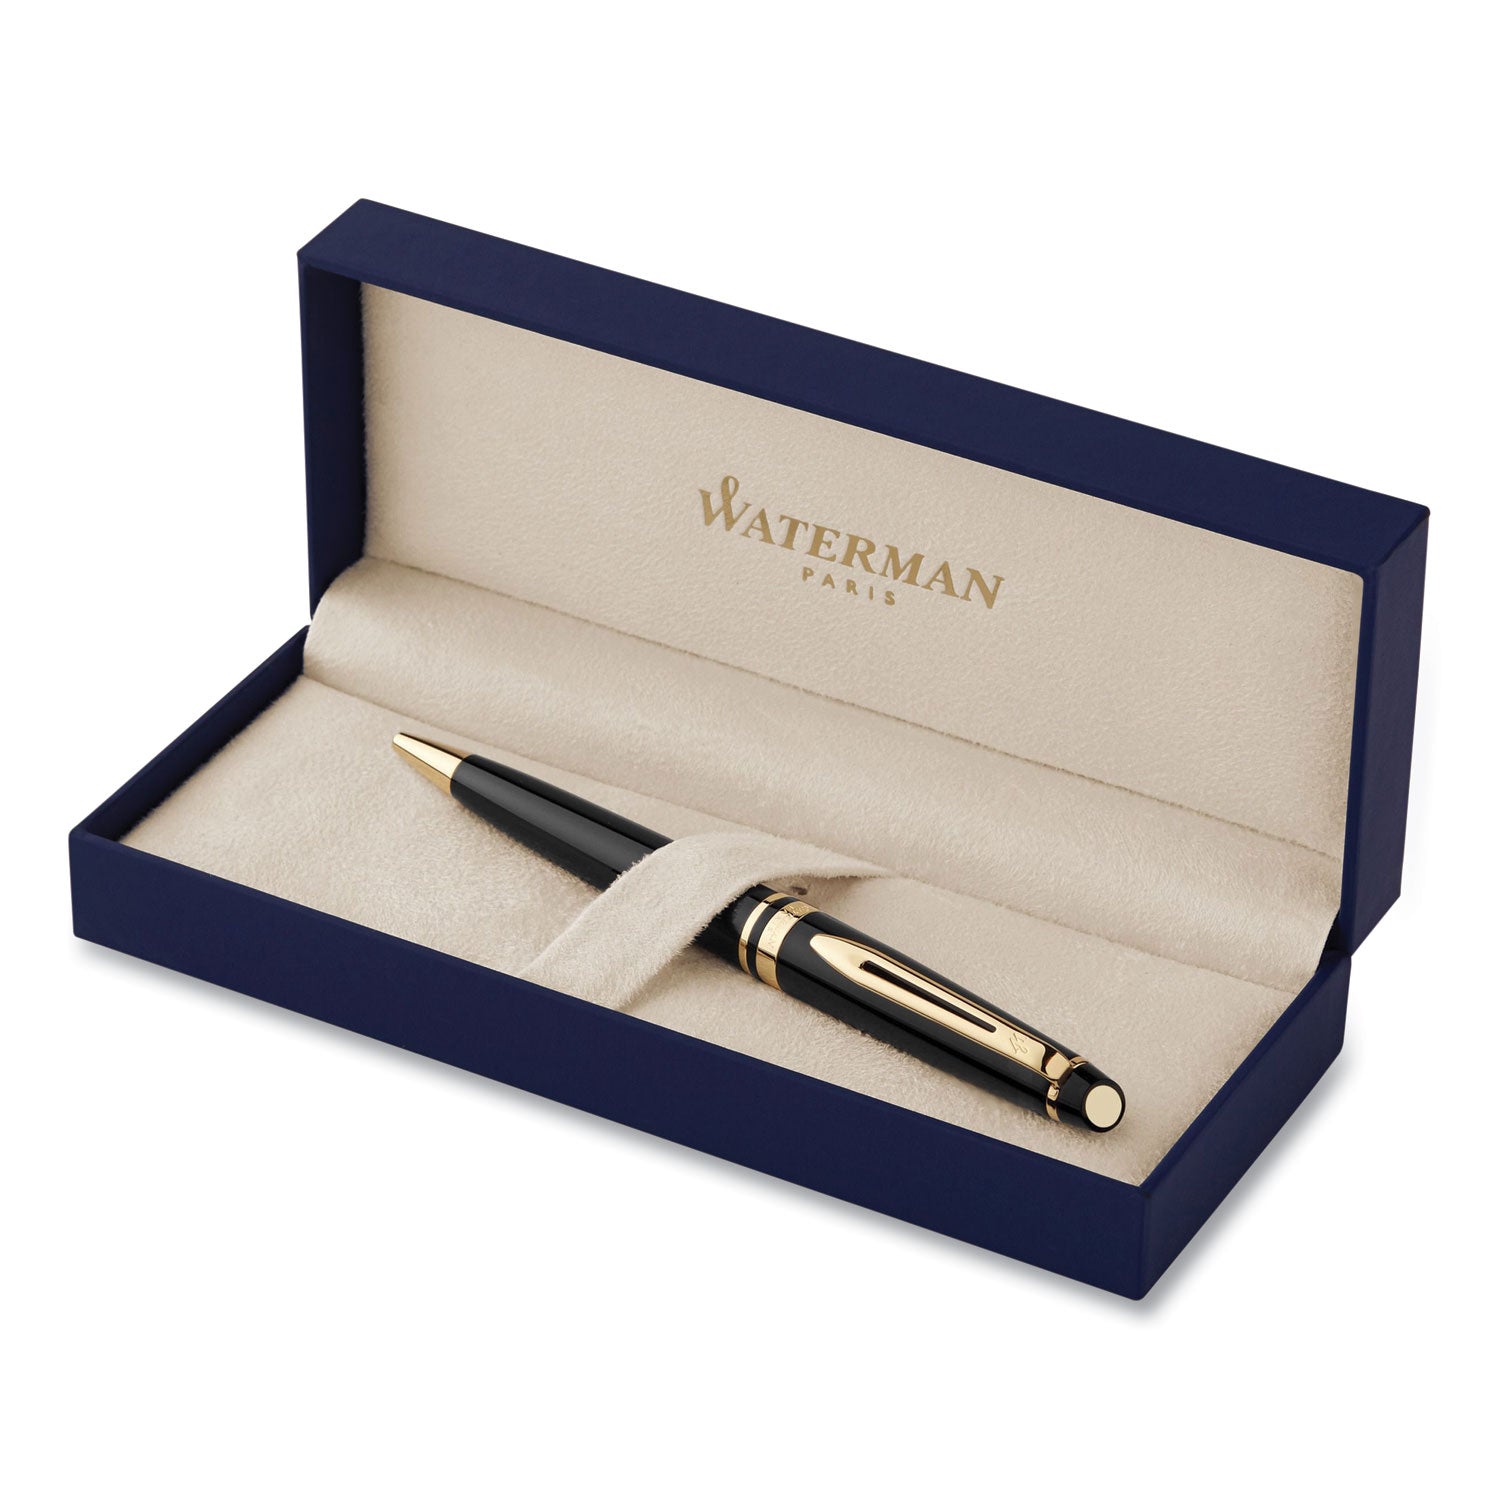 Expert Ballpoint Pen, Retractable, Medium 1 mm, Blue Ink, Black/Gold Barrel - 